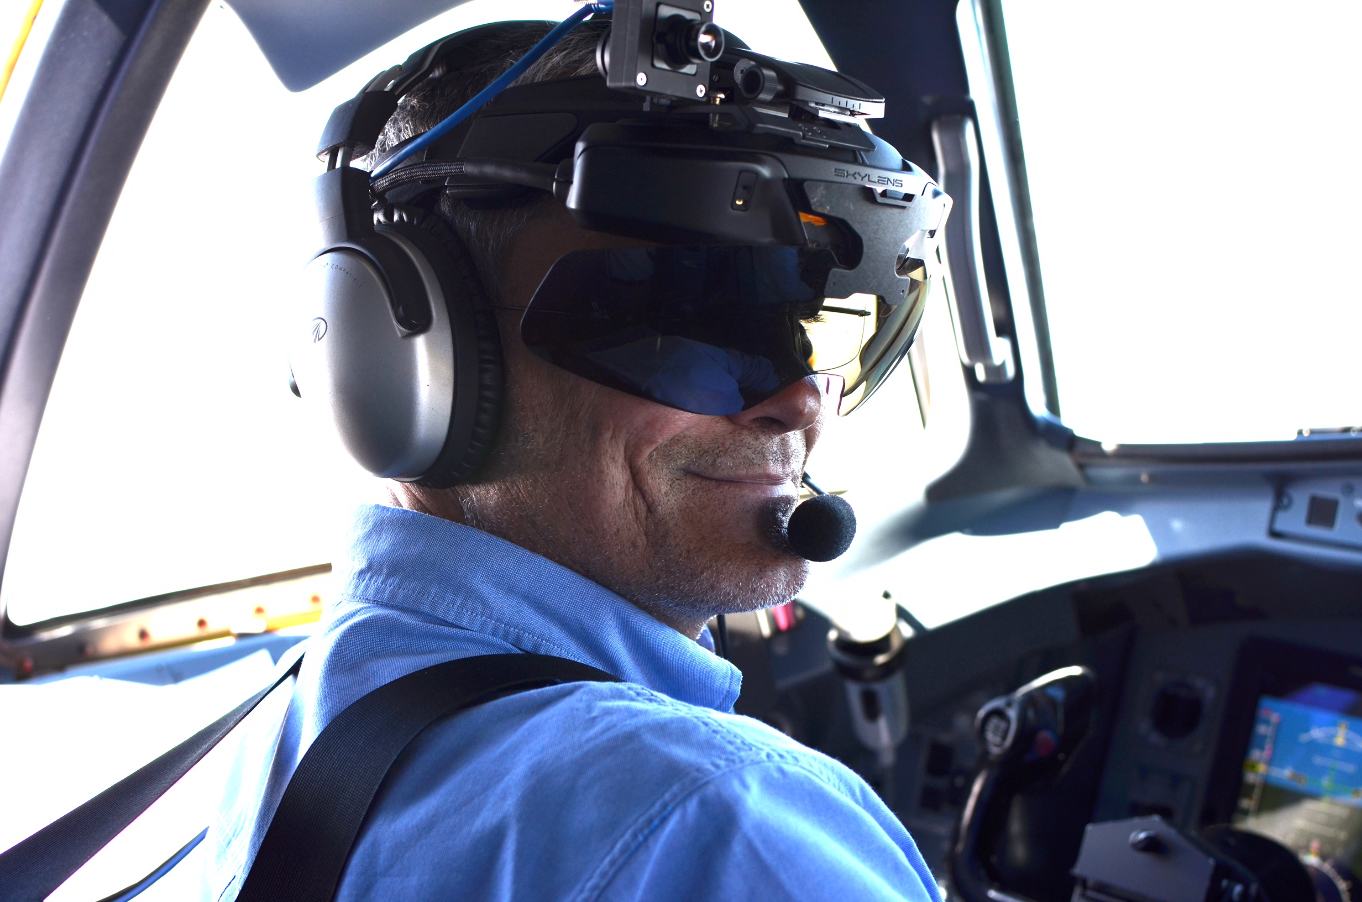 Wearable Elbit HUD in flight tests on ATR-600 regional aircraft